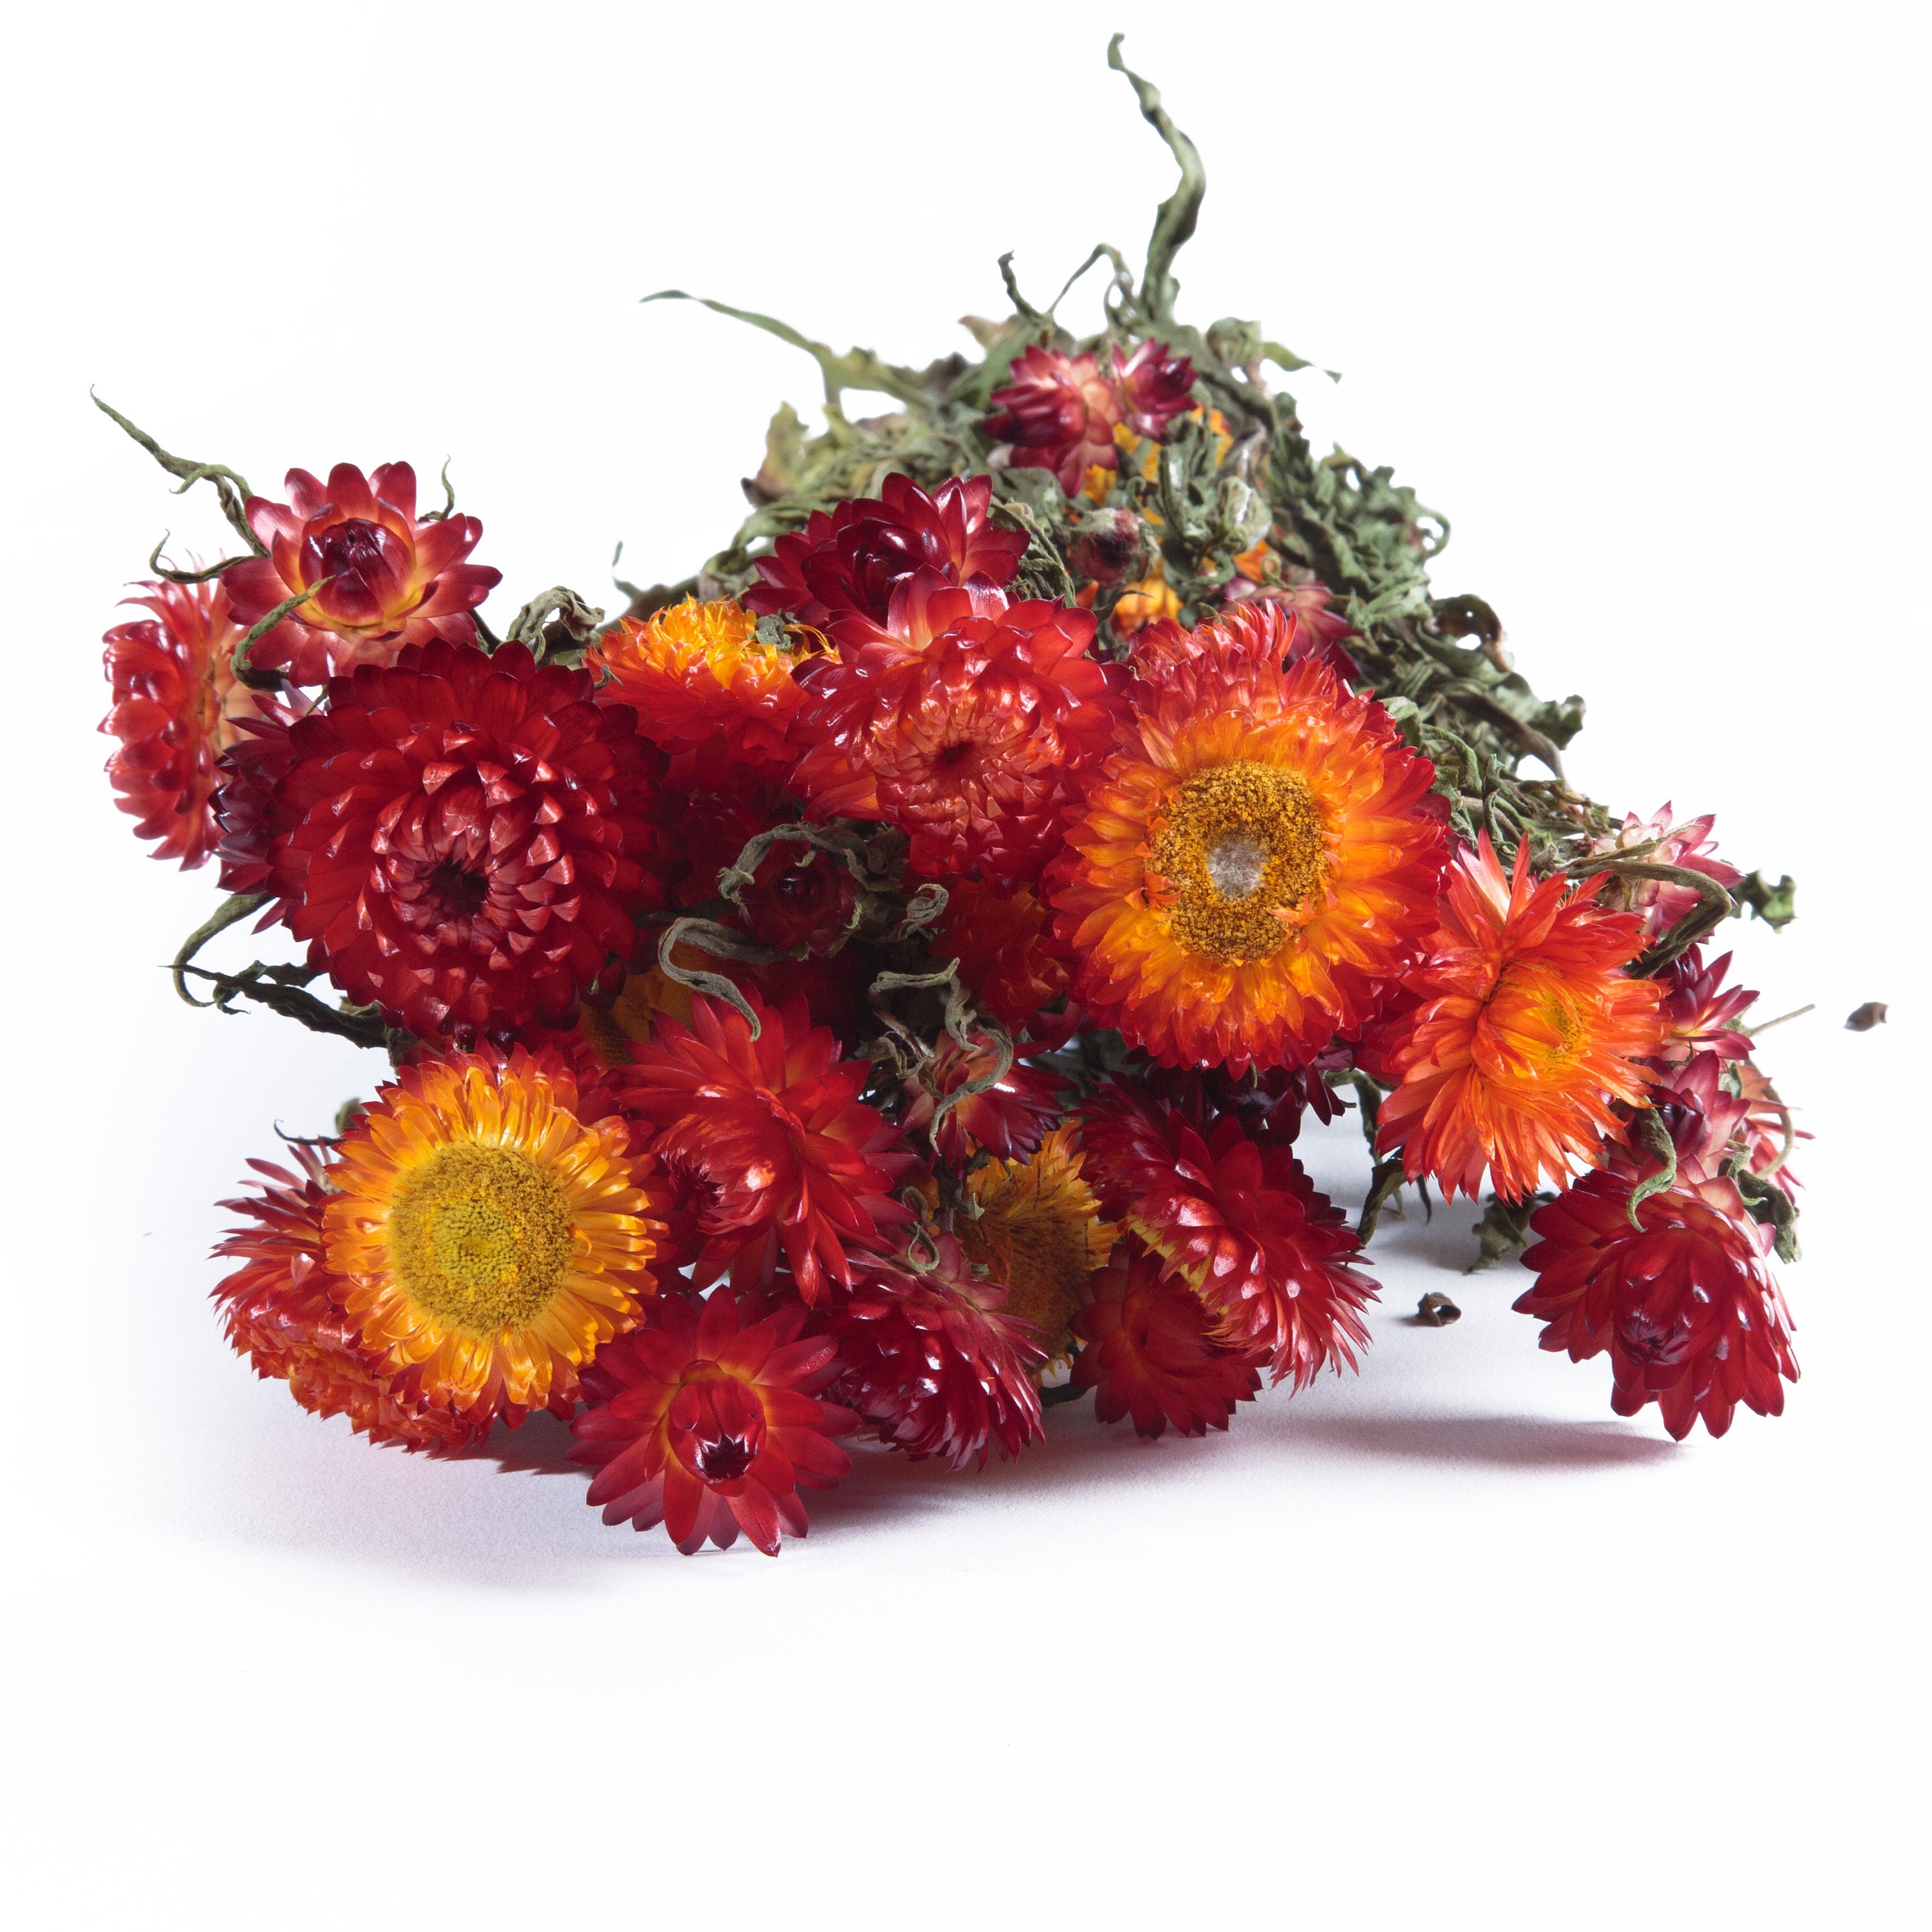 Strawflowers (Helichrysum) - Pink - Dried Flowers Forever - DIY